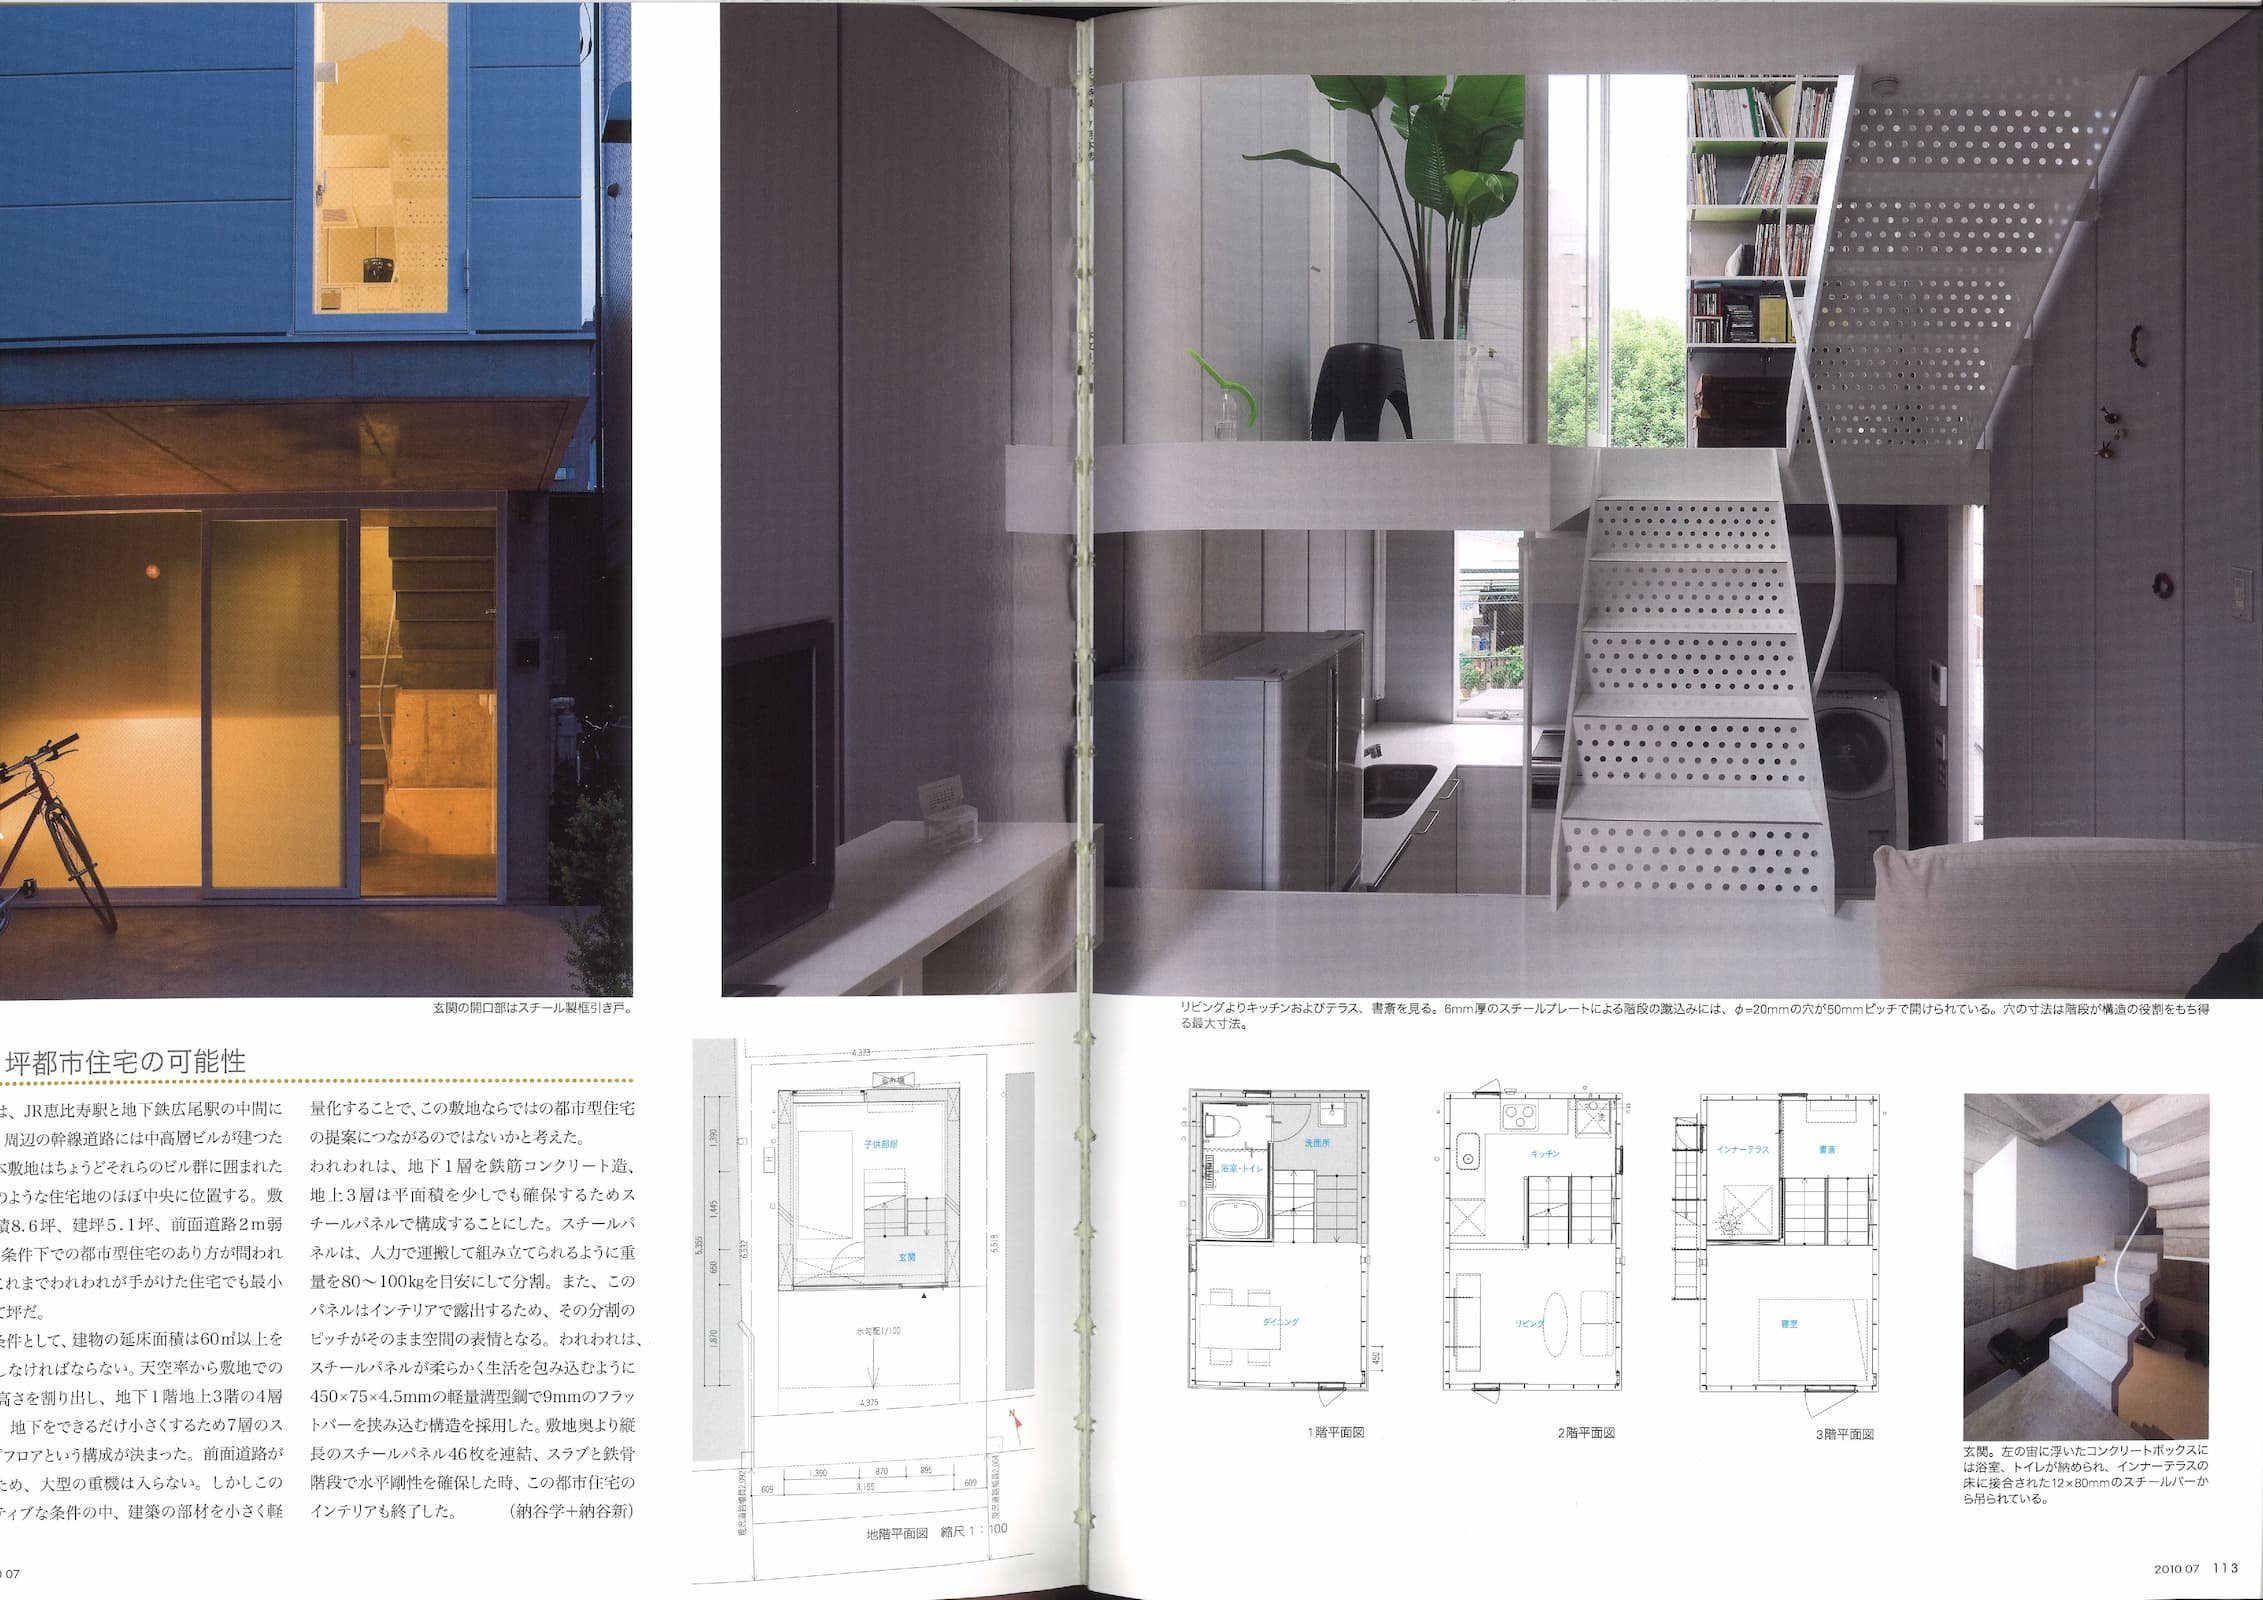 住宅特集 - Housing Special Feature 291 - House in Ebisu_Page_3.jpg